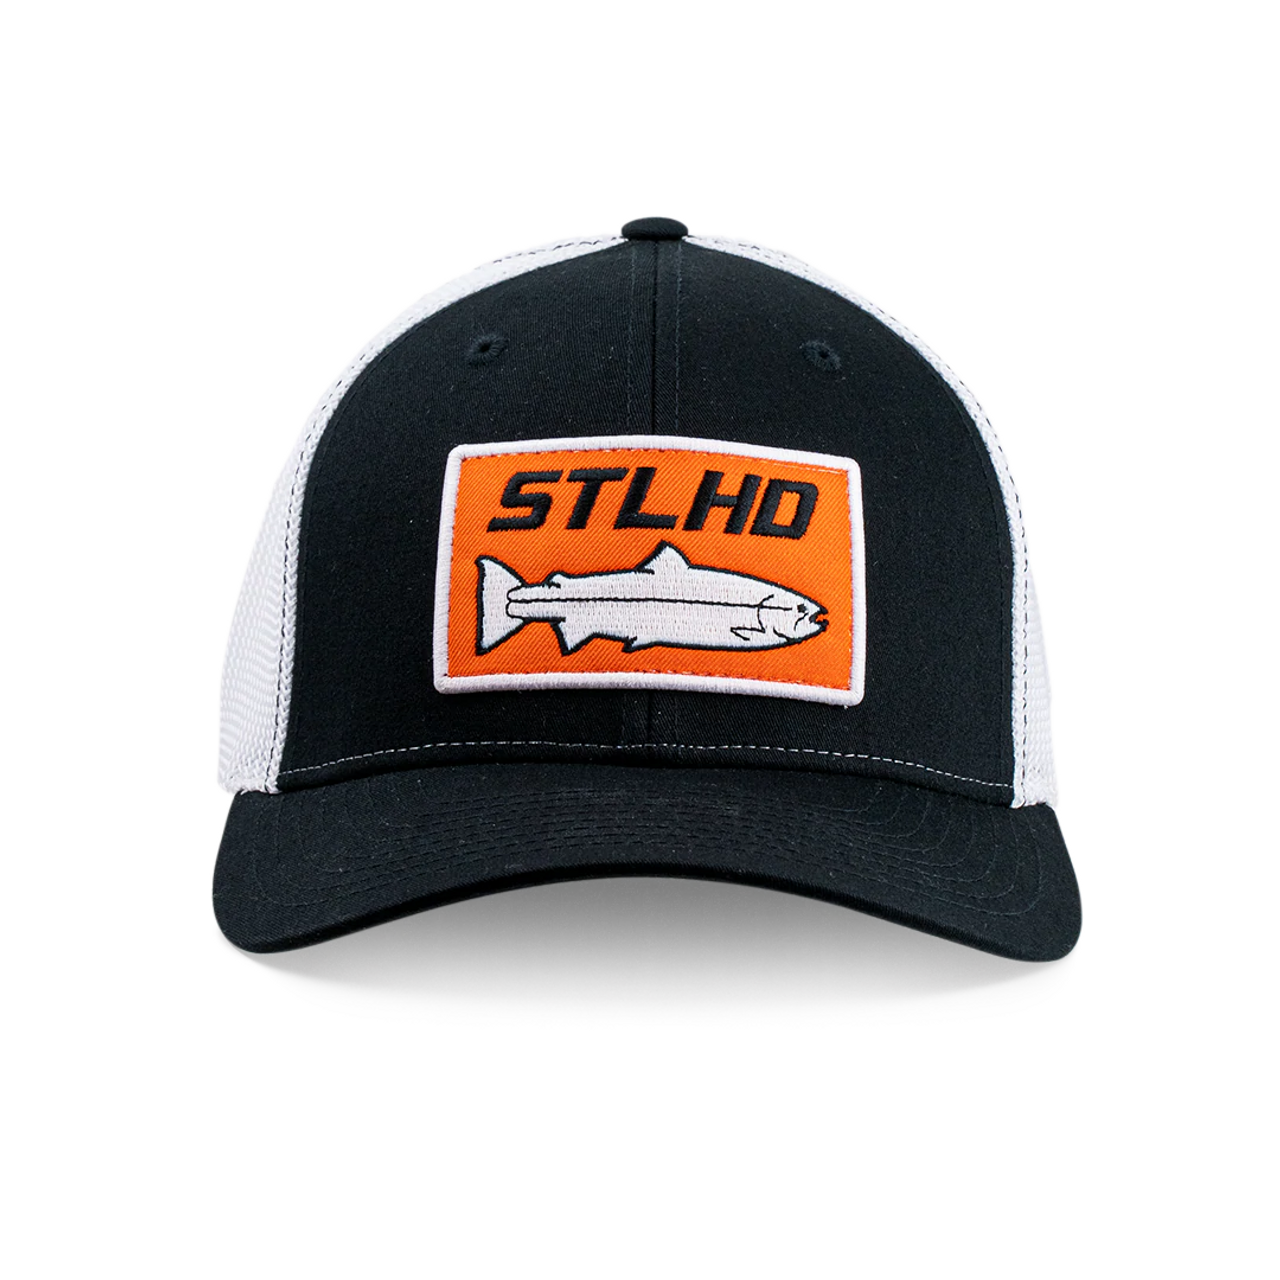 STLHD STANDARD BLACK/WHITE FLEXFIT HAT - FRED'S CUSTOM TACKLE